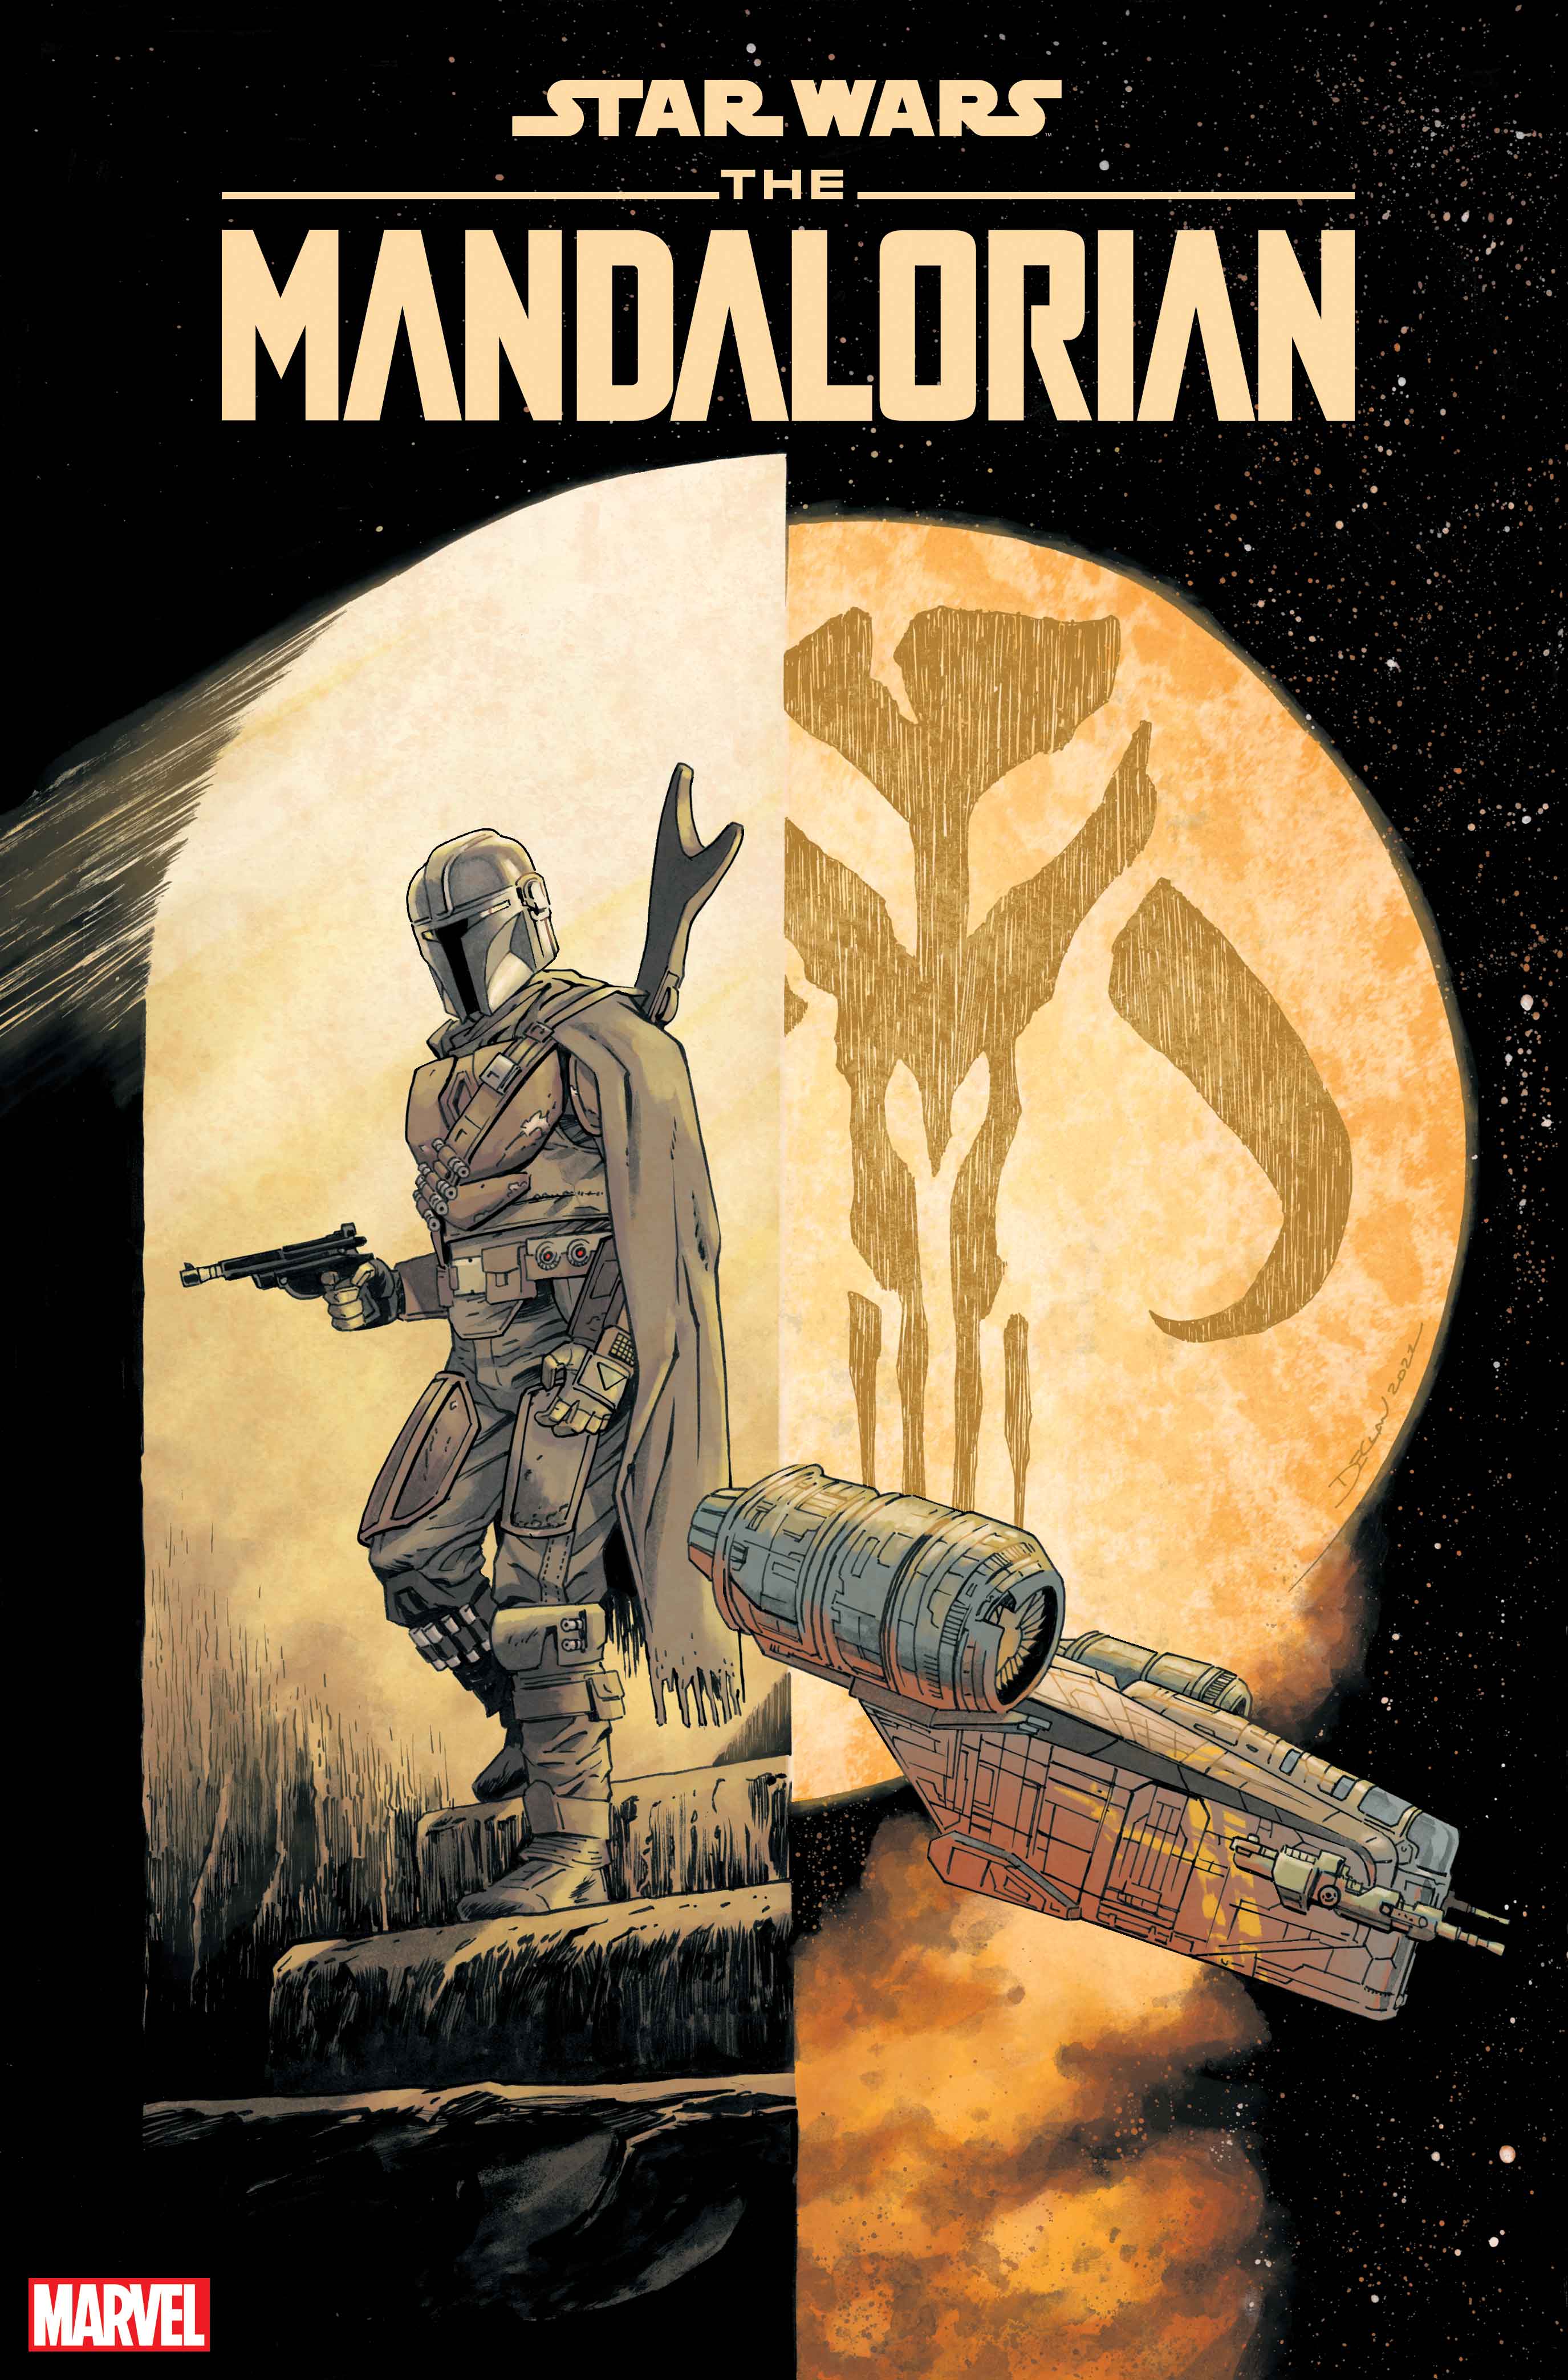 Portada variante de Star Wars: The Mandalorian #1 por Declan Shalvey